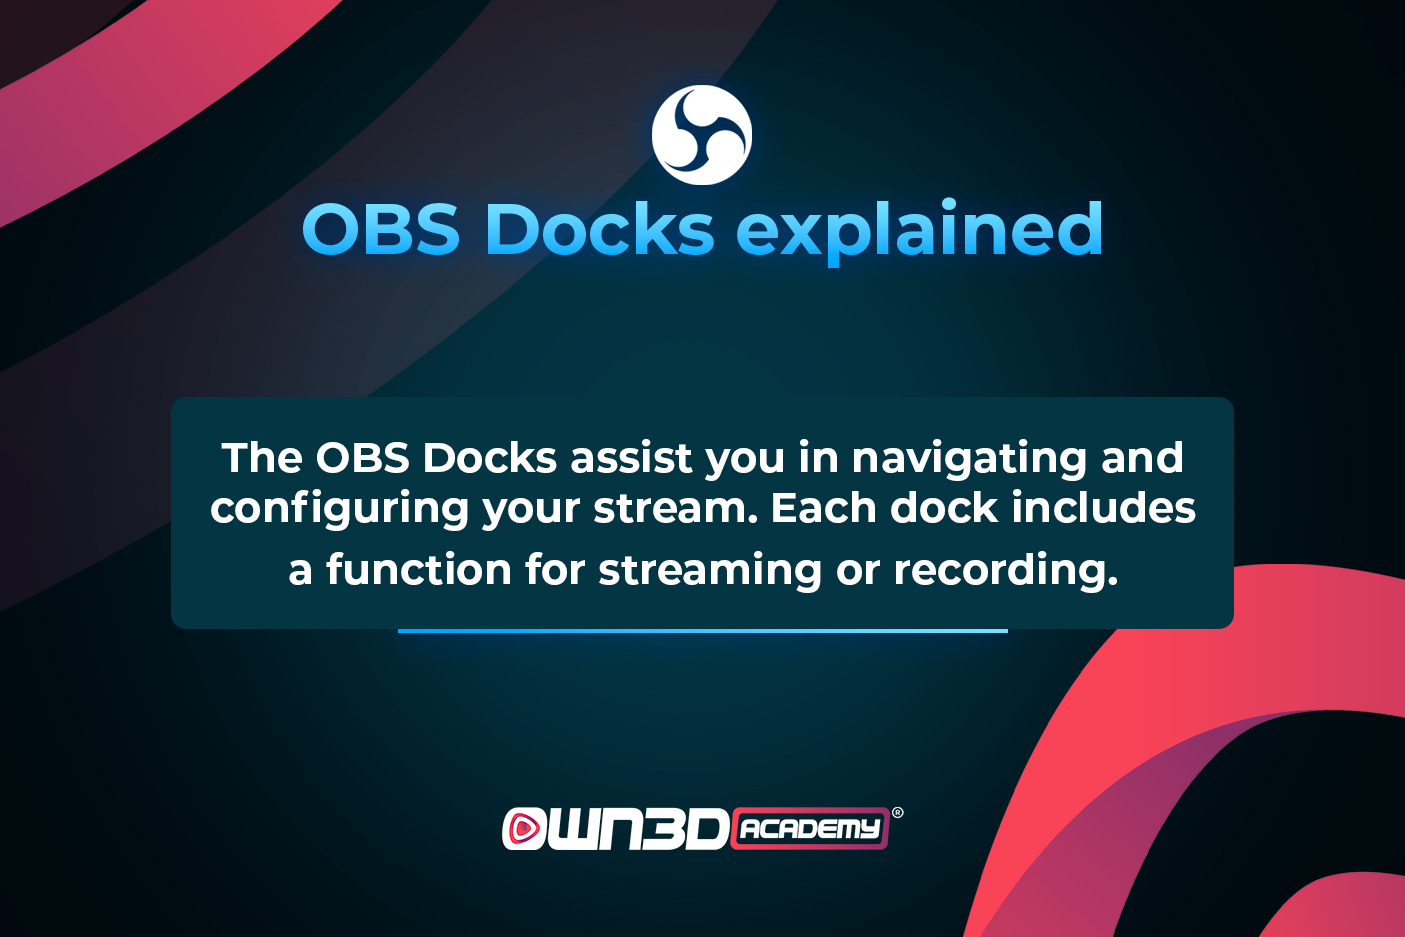 OBS-DOCKS-EXPLAINED_ENG_what-docks-are.jpg